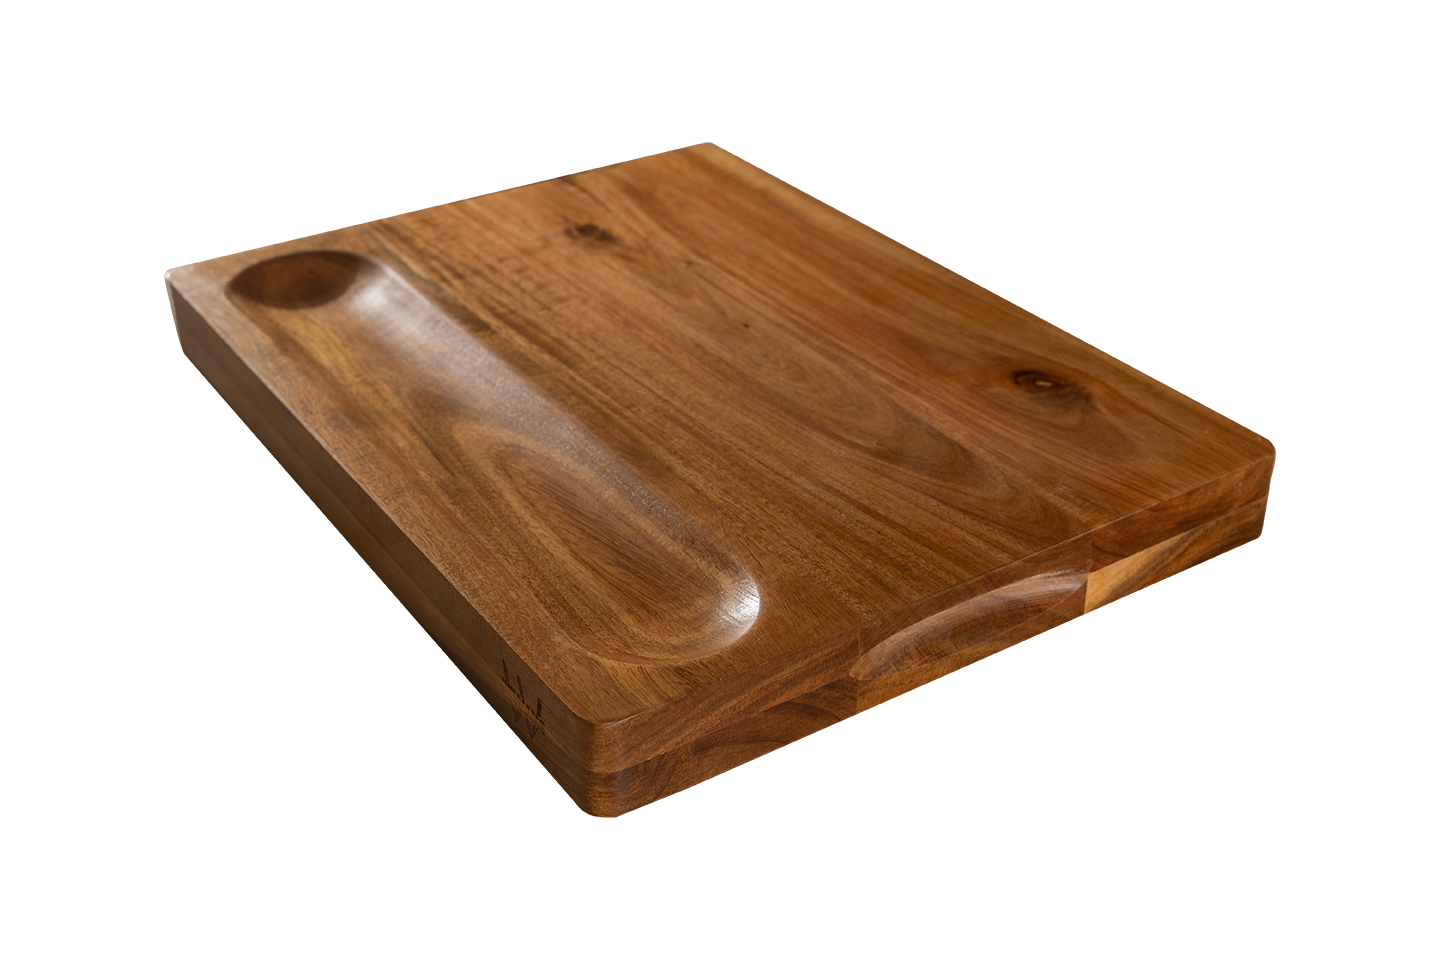 Williams Sonoma Acacia Wood Cutting Boards - Set of 3